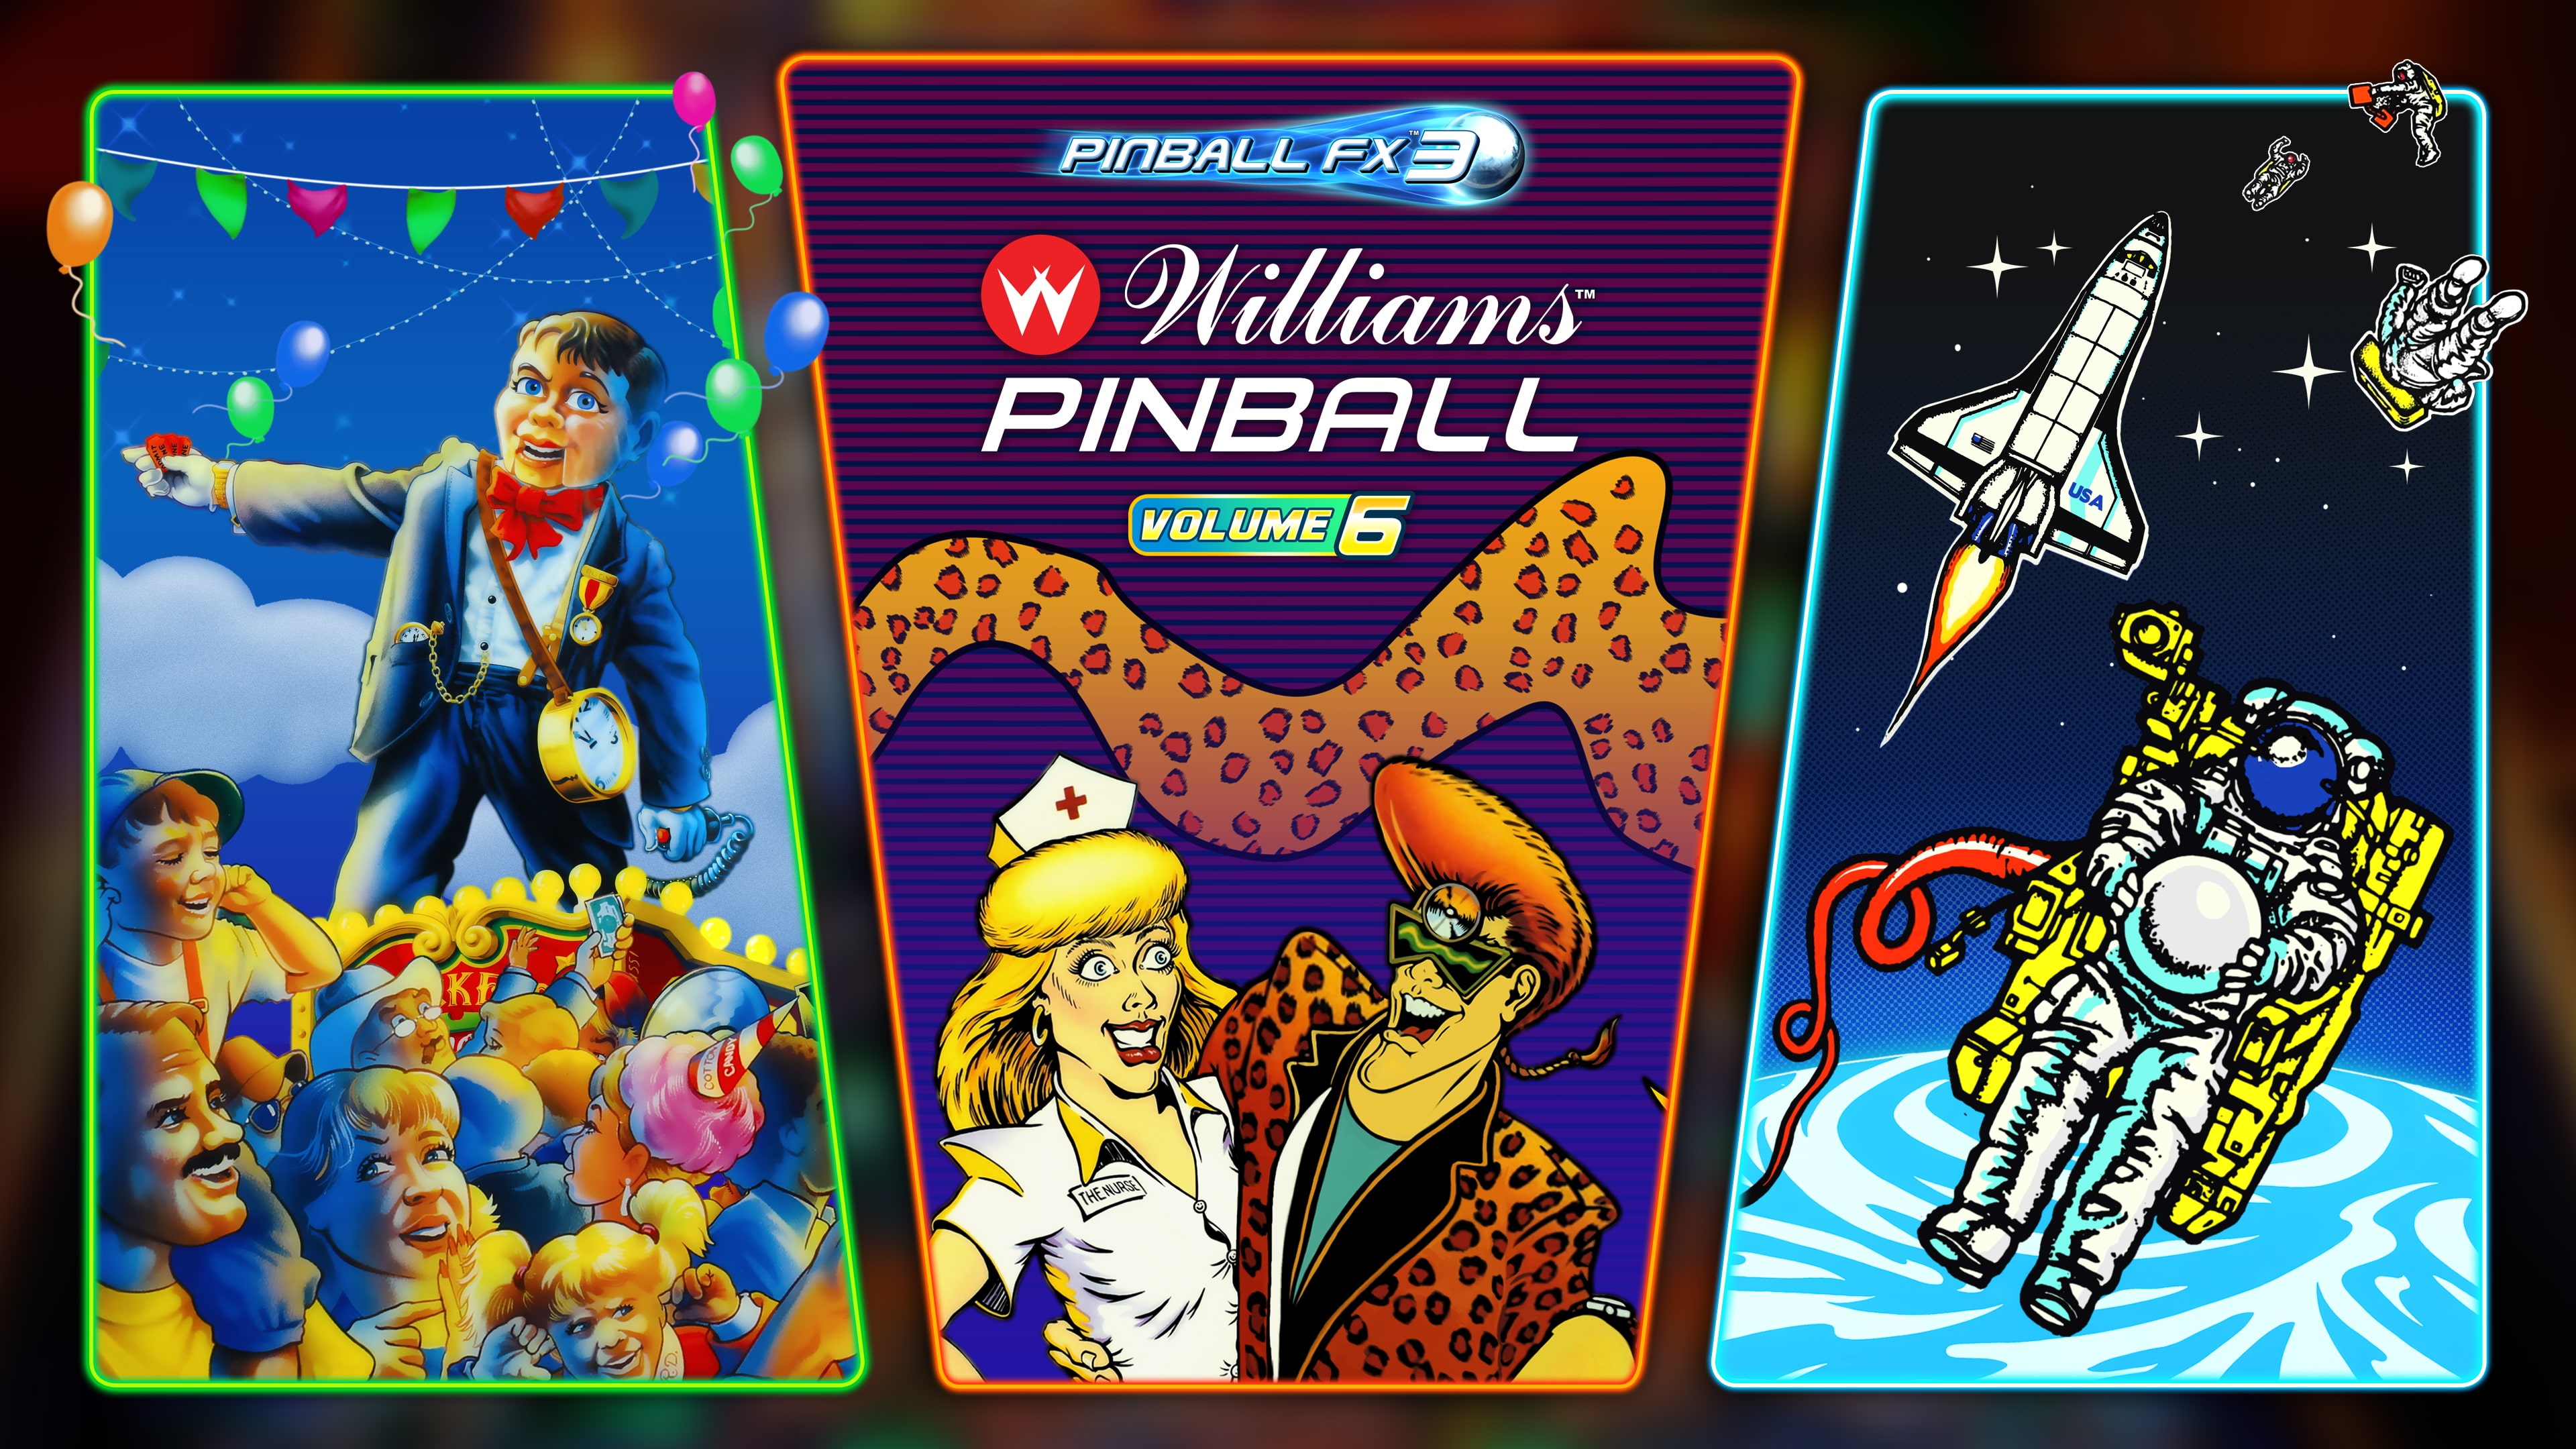 Pinball FX3 - Williams Pinball: Volume 6